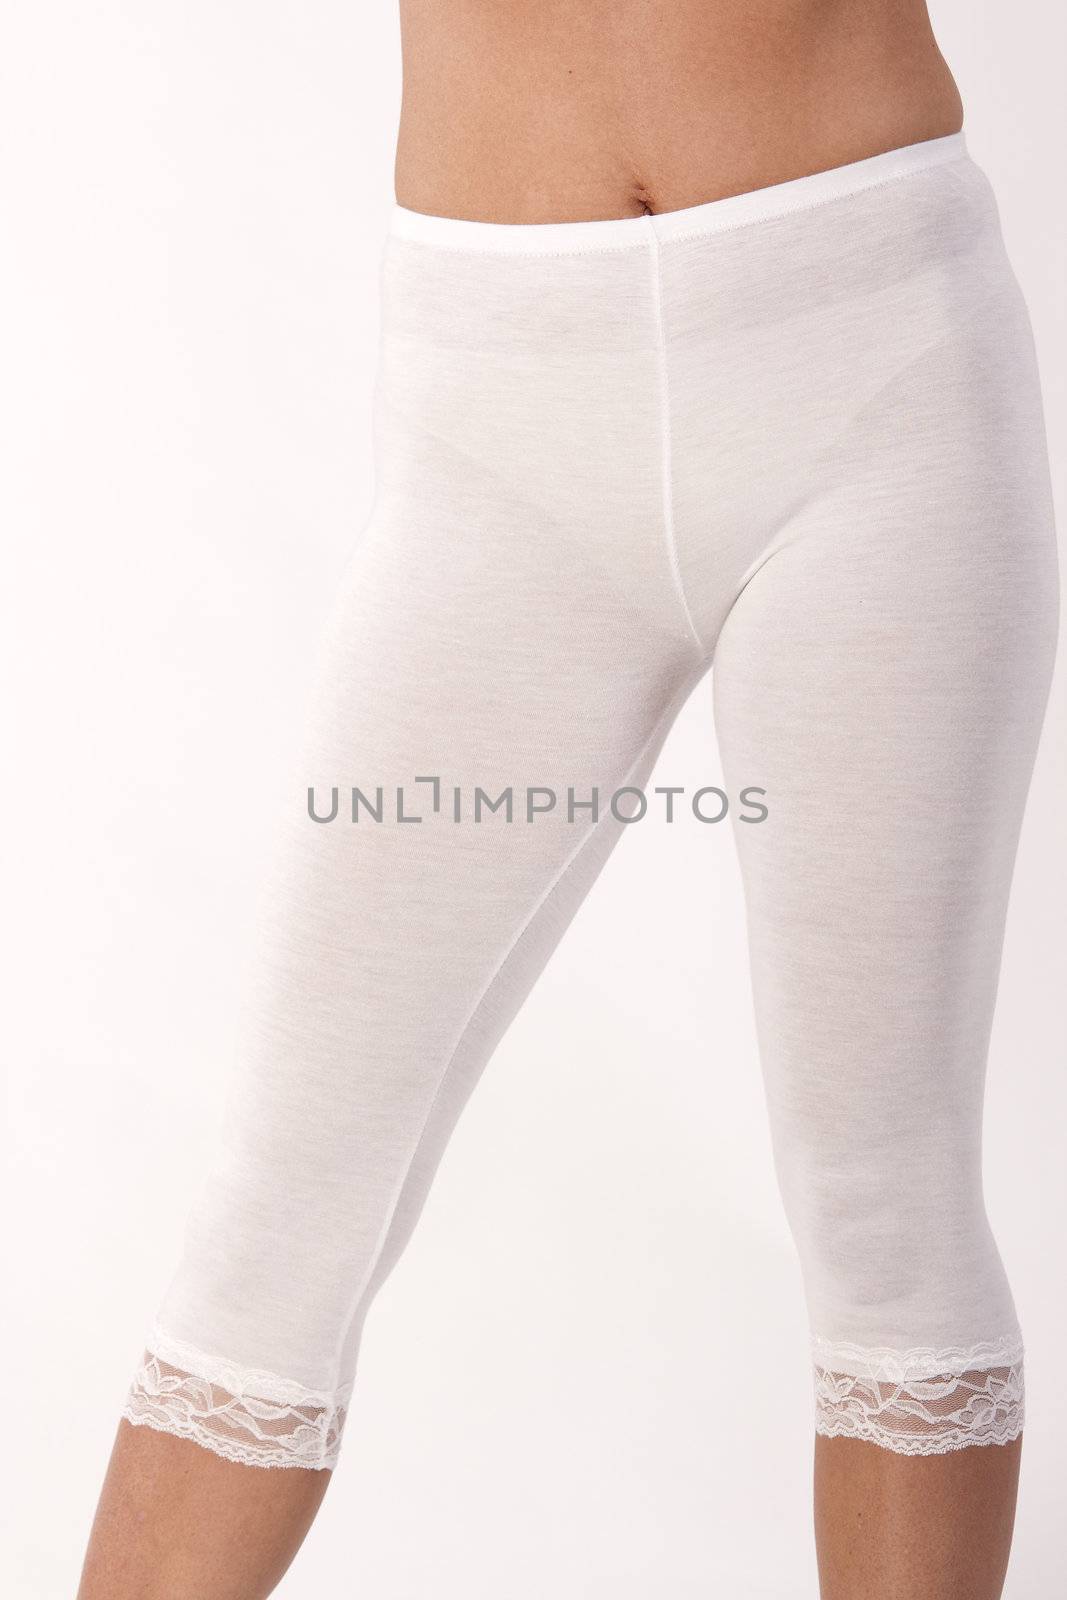 white leggings by STphotography